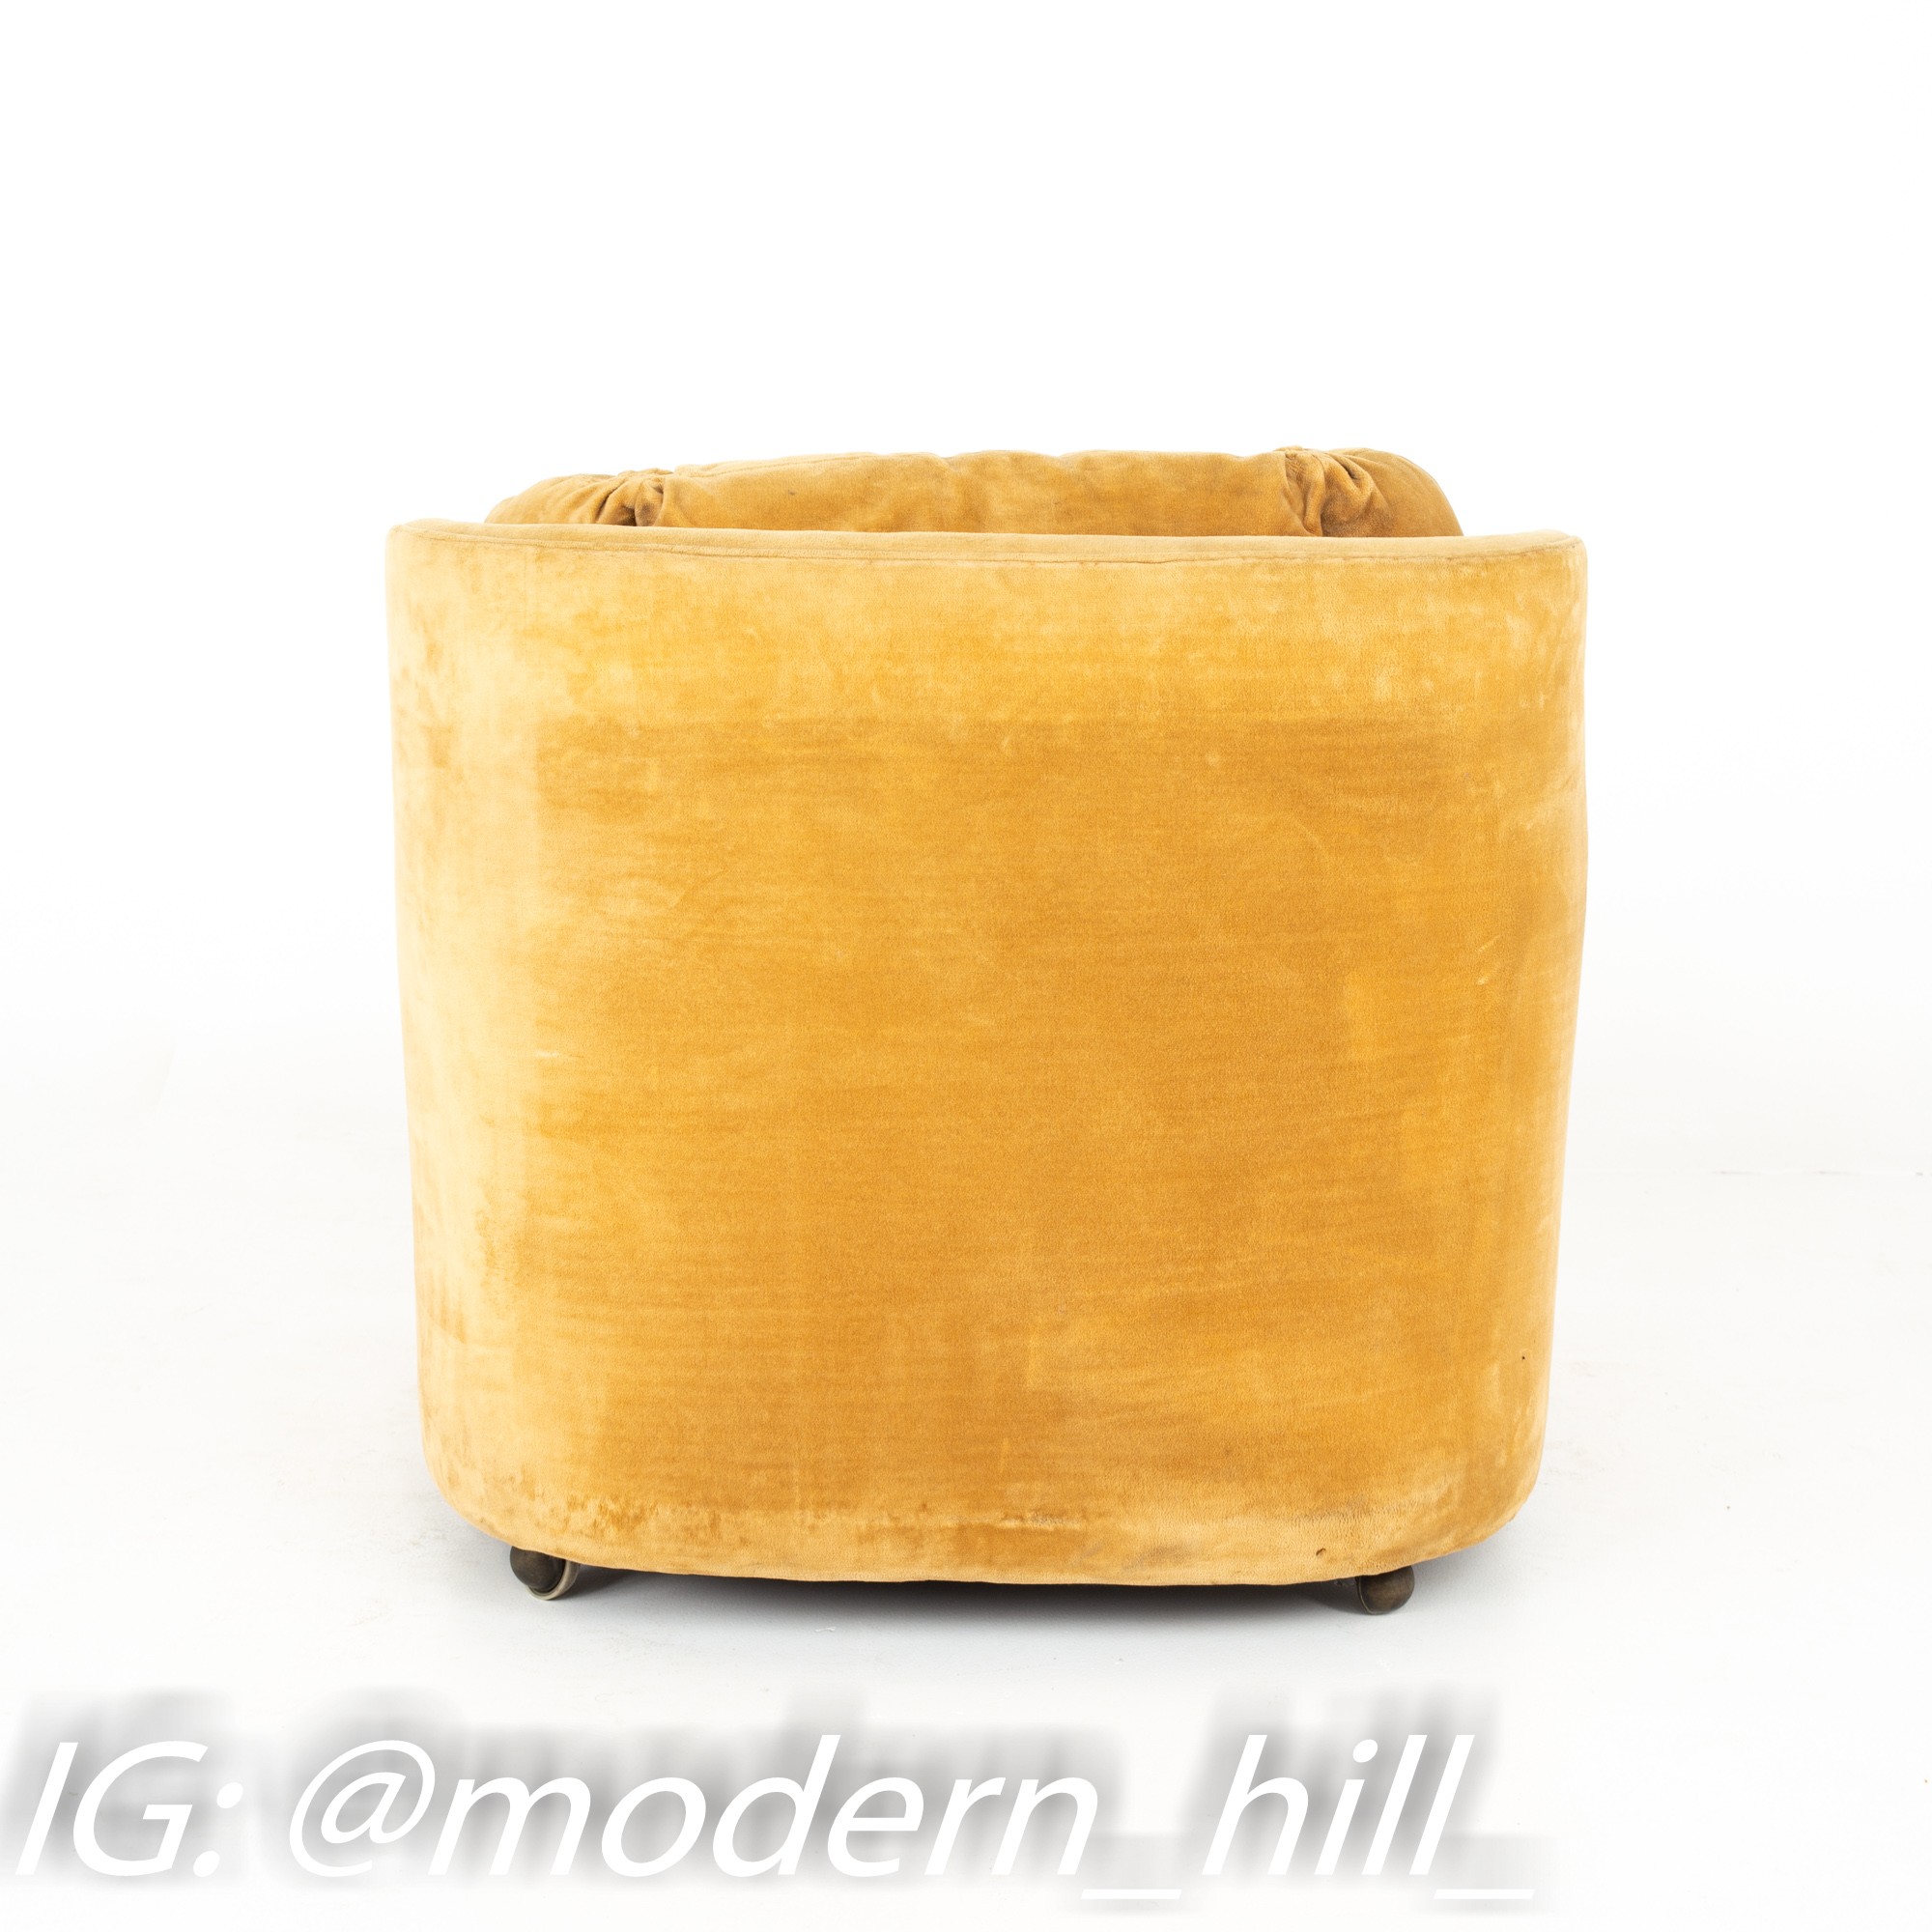 Henredon Folio 500 Mid Century Barrel Lounge Chairs - Pair